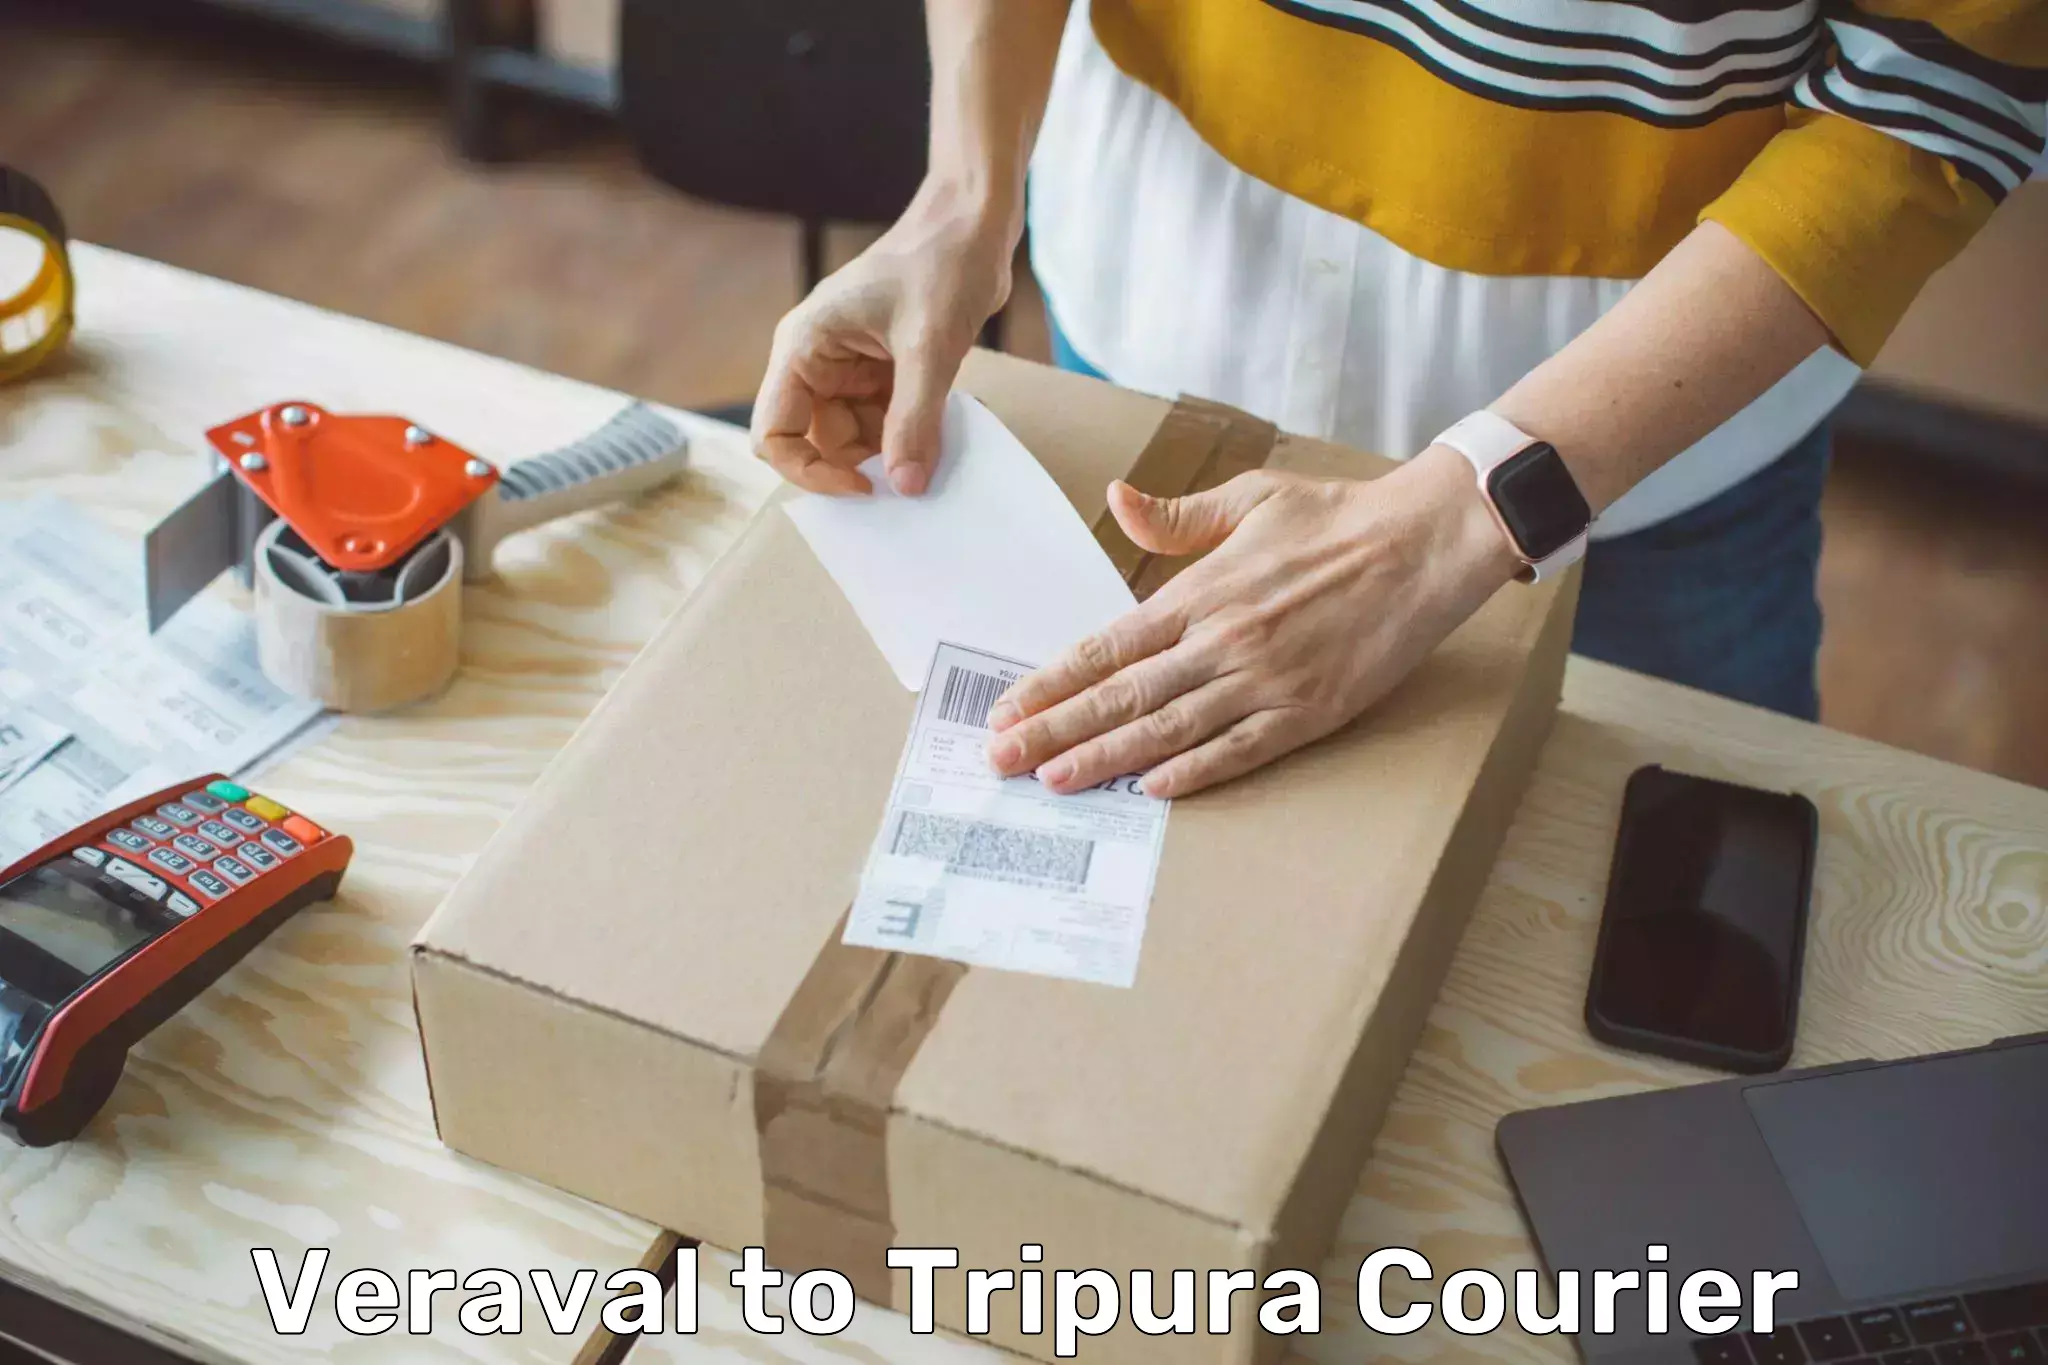 Quick dispatch service Veraval to Tripura